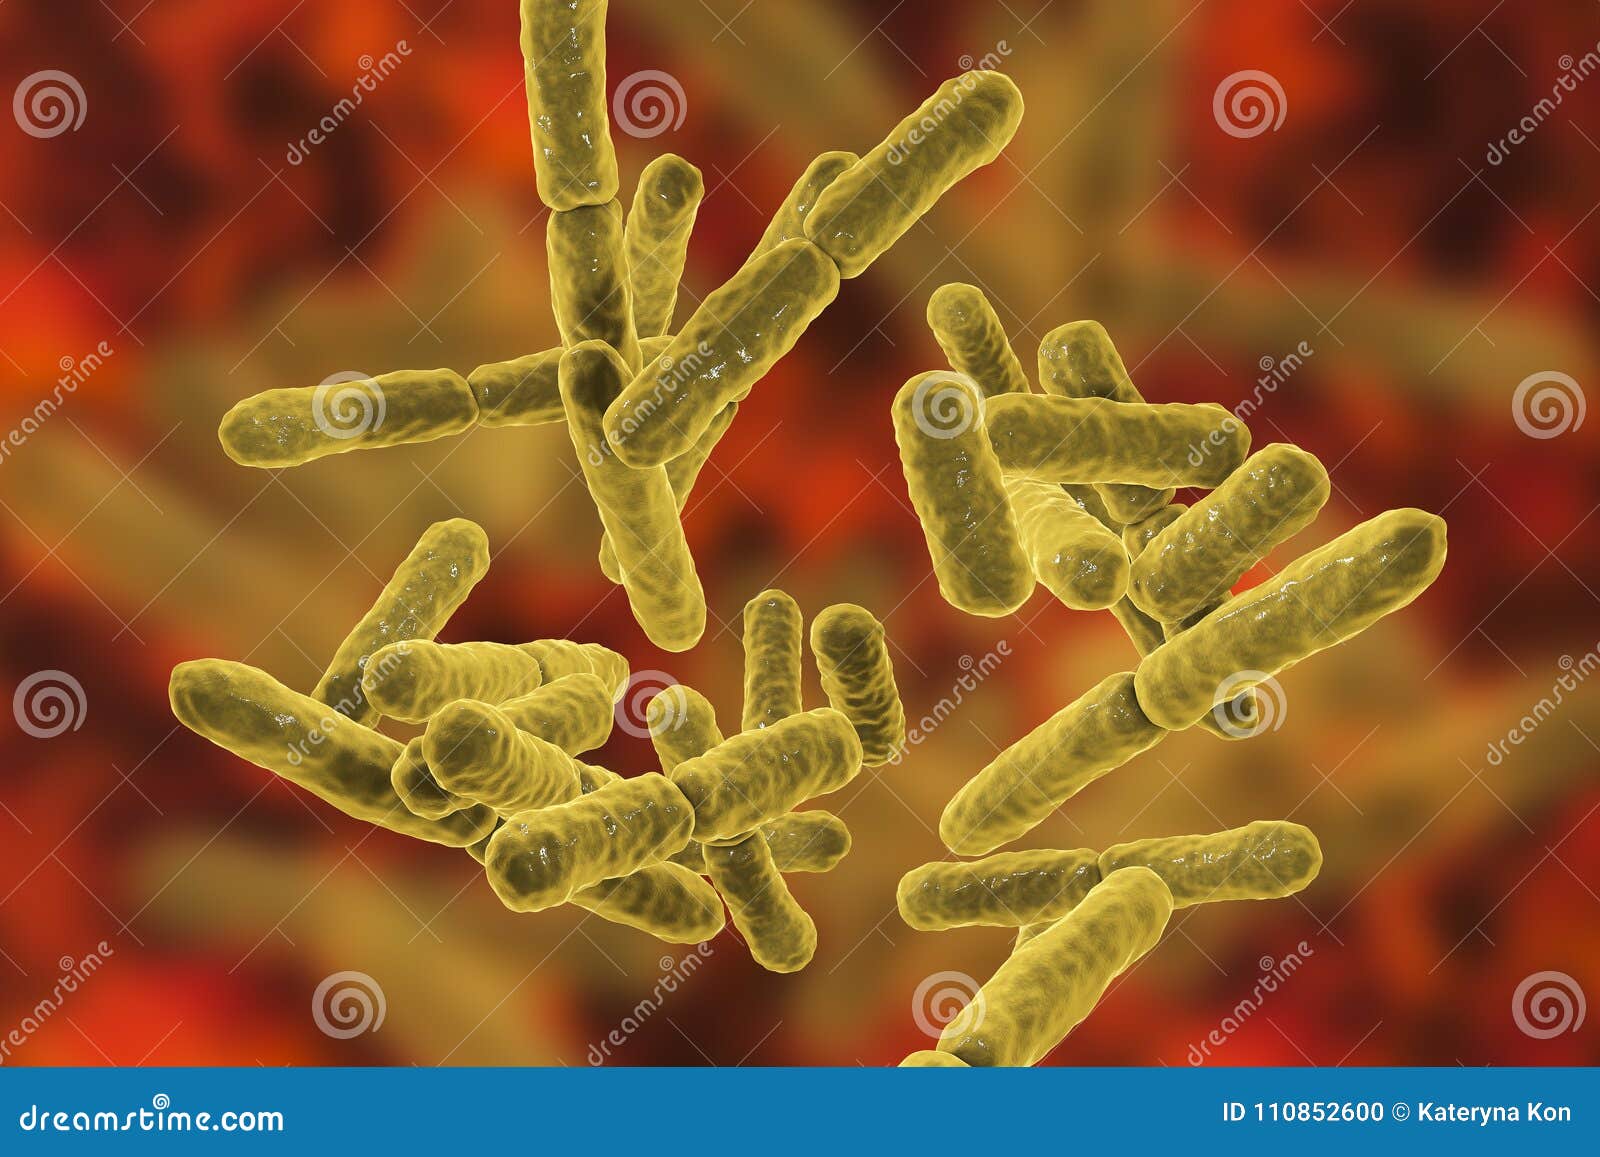 bacteria bifidobacterium, gram-positive anaerobic rod-d bacteria